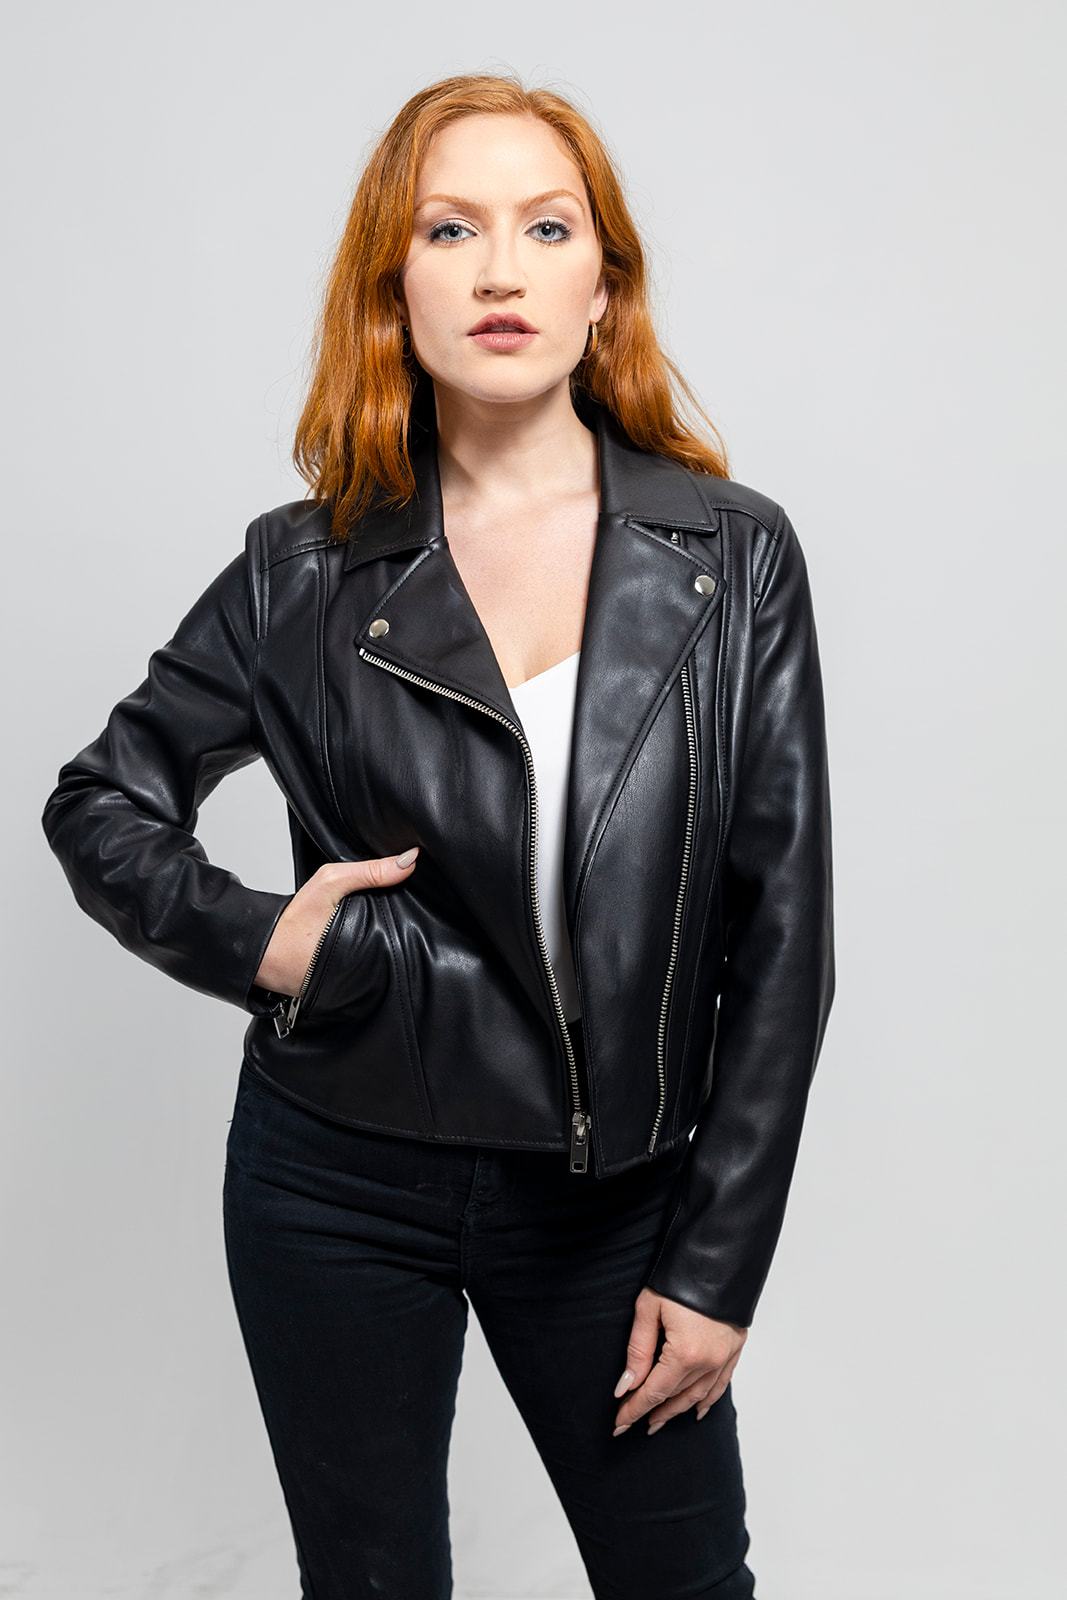 Demi Women's Vegan Faux Leather Jacket Women's Fashion Leather Jacket Whet Blu NYC Black XS 